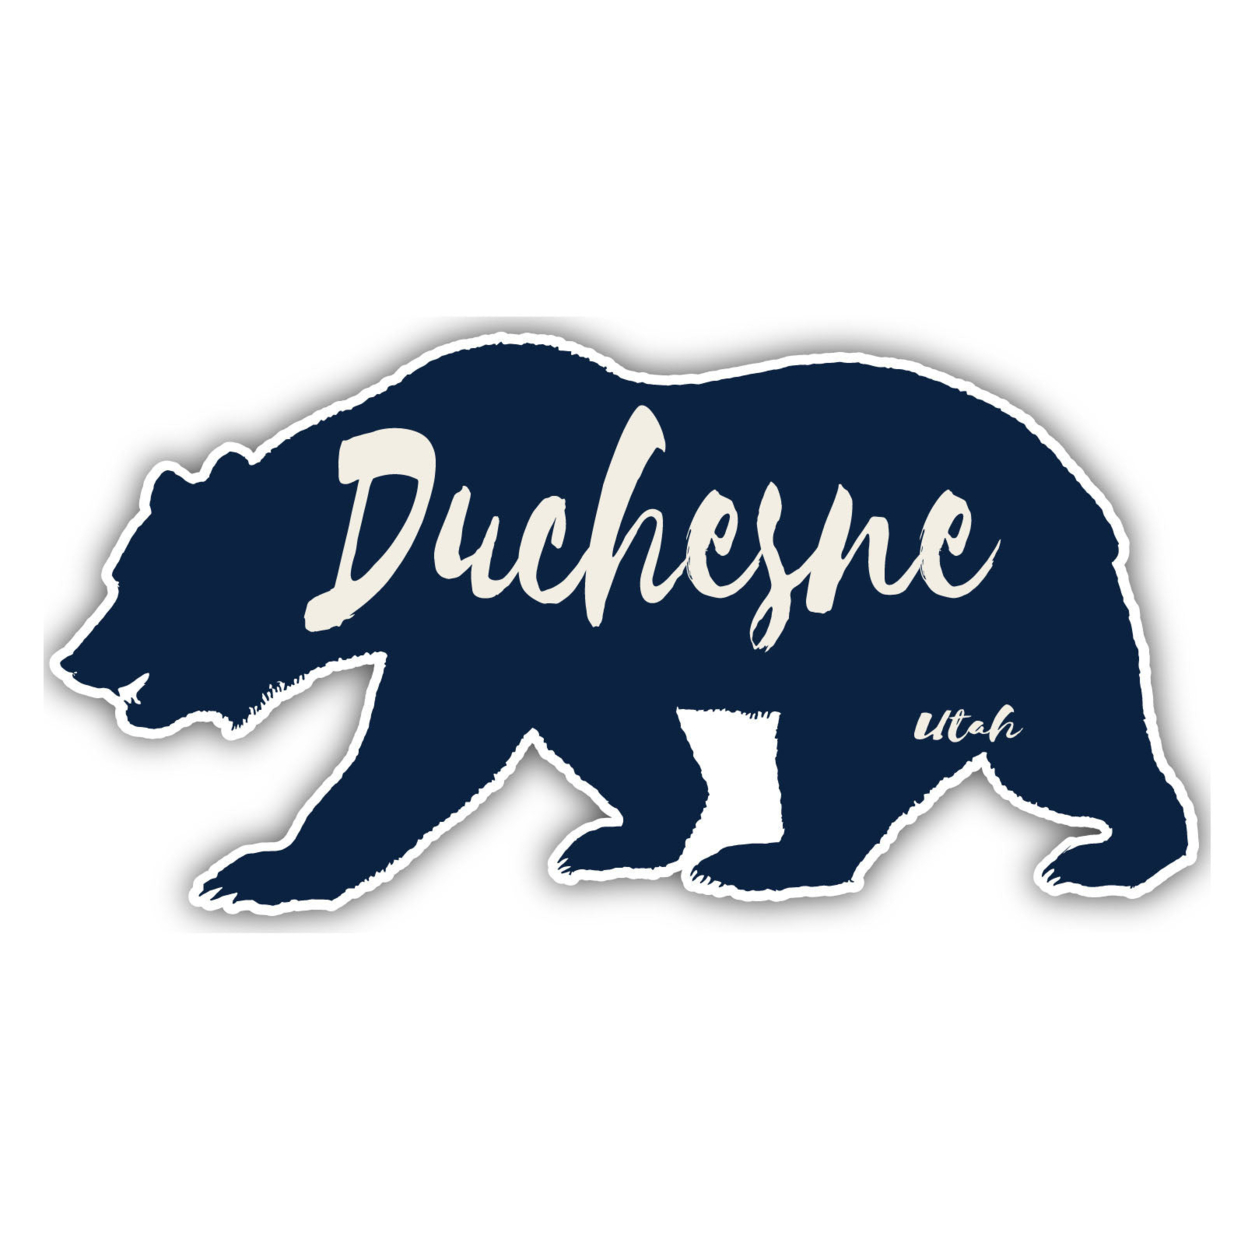 Duchesne Utah Souvenir Decorative Stickers (Choose Theme And Size) - 4-Pack, 6-Inch, Bear